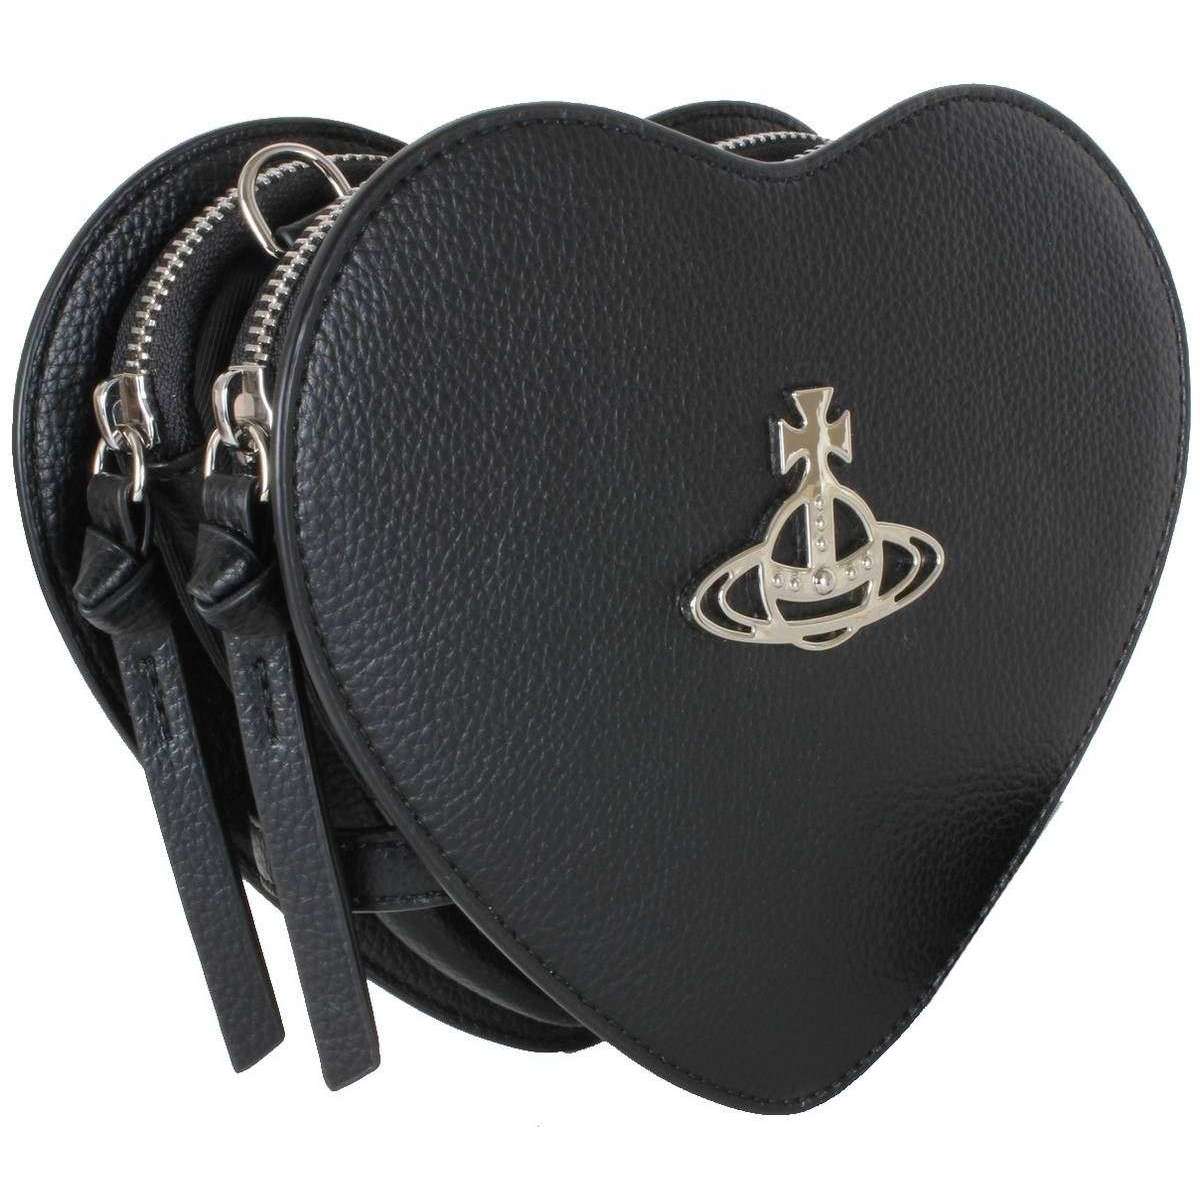 Vivienne Westwood Black Heart Bag